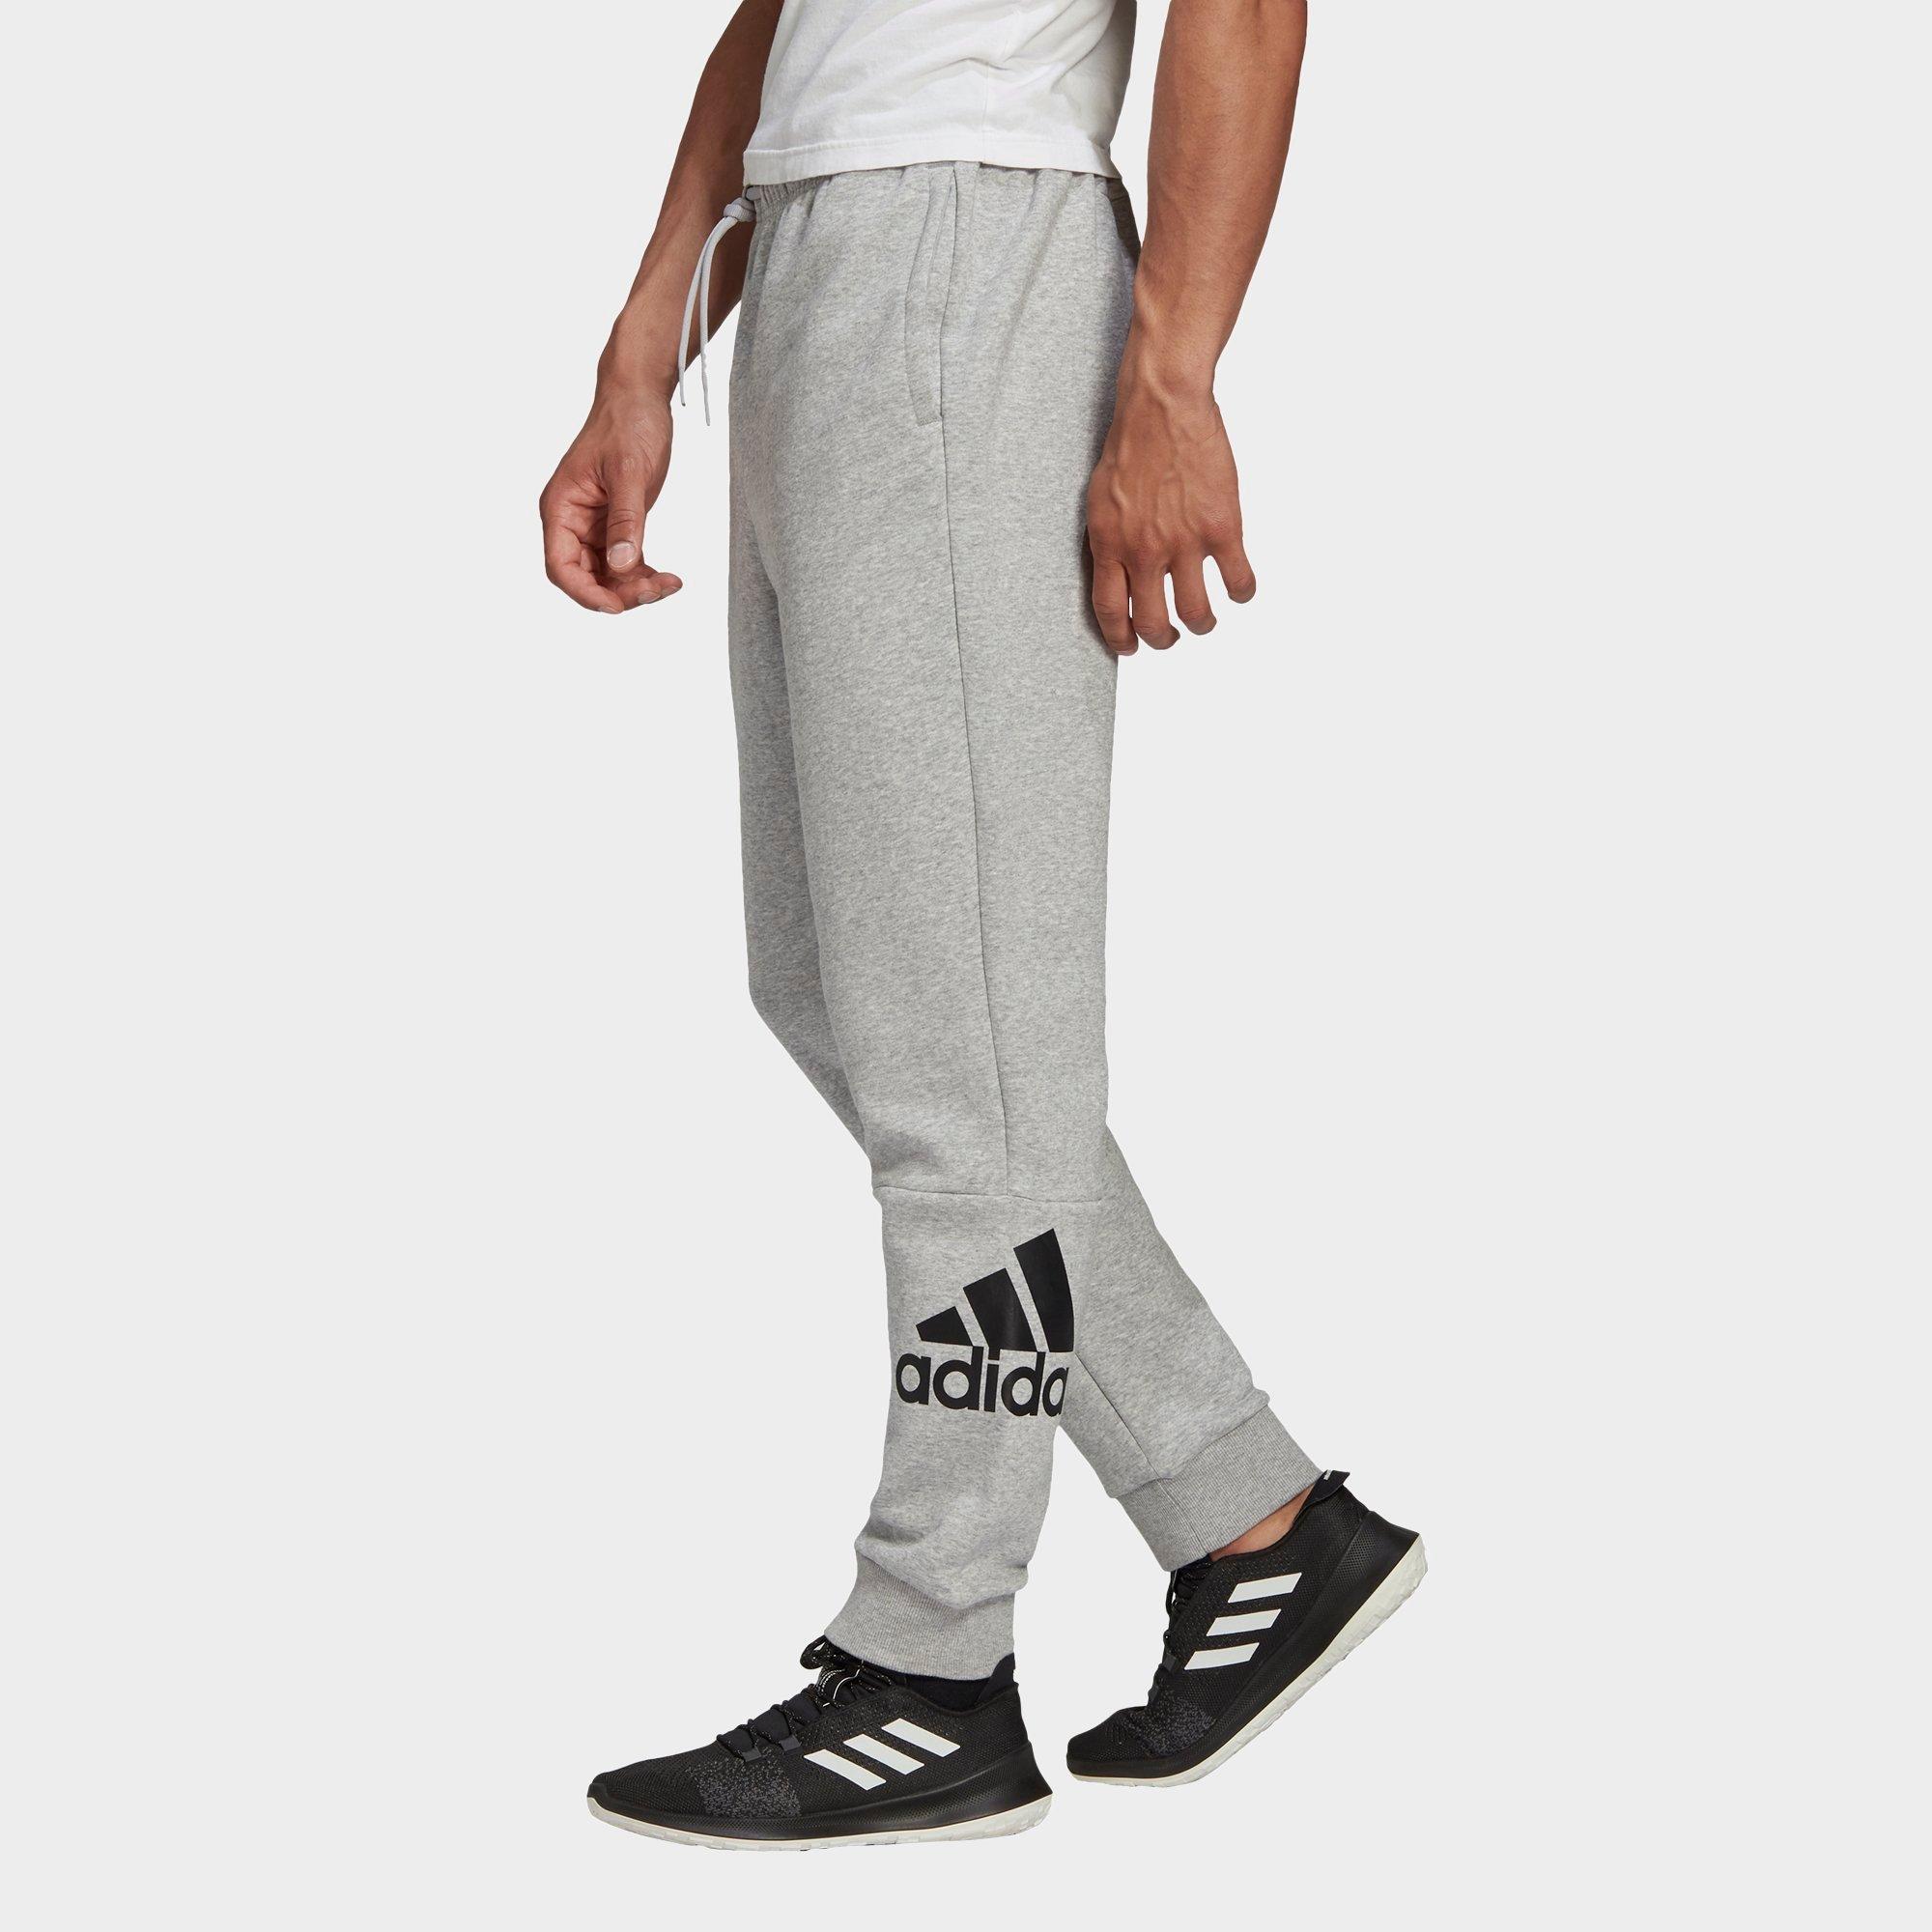 adidas fleece jogger pants